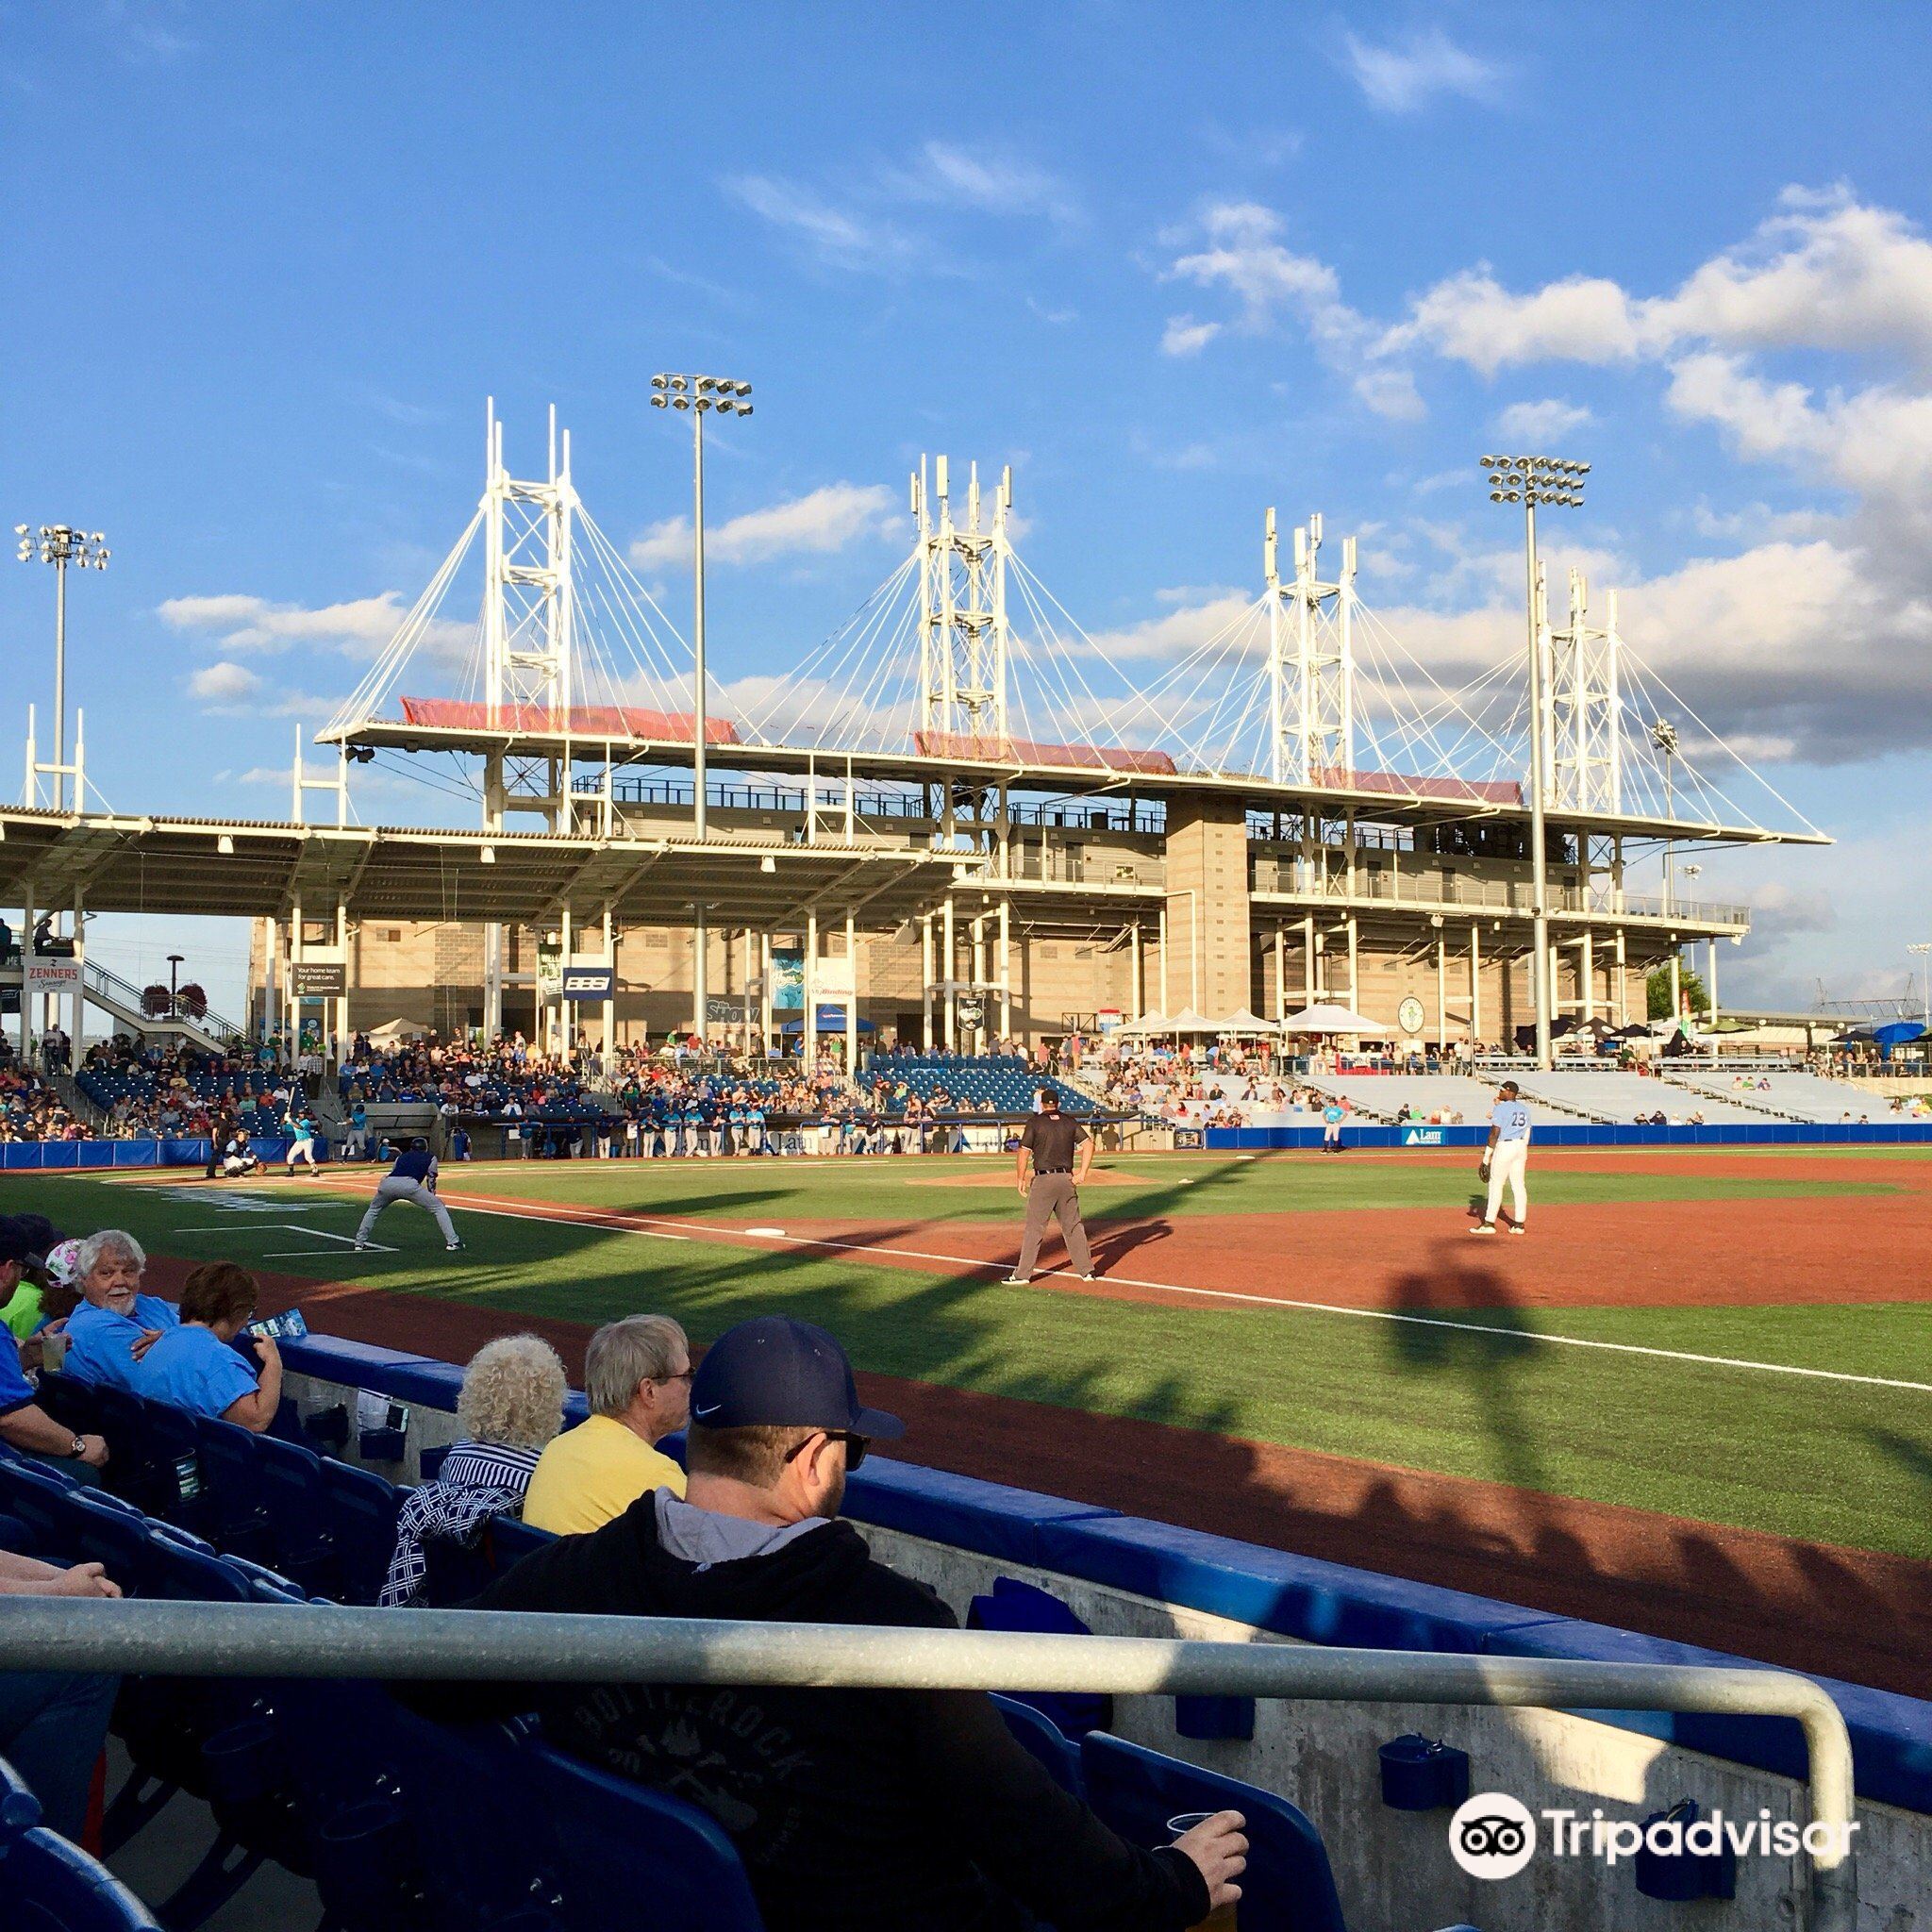 Great Minor League Stadium! - Review of Ron Tonkin Field